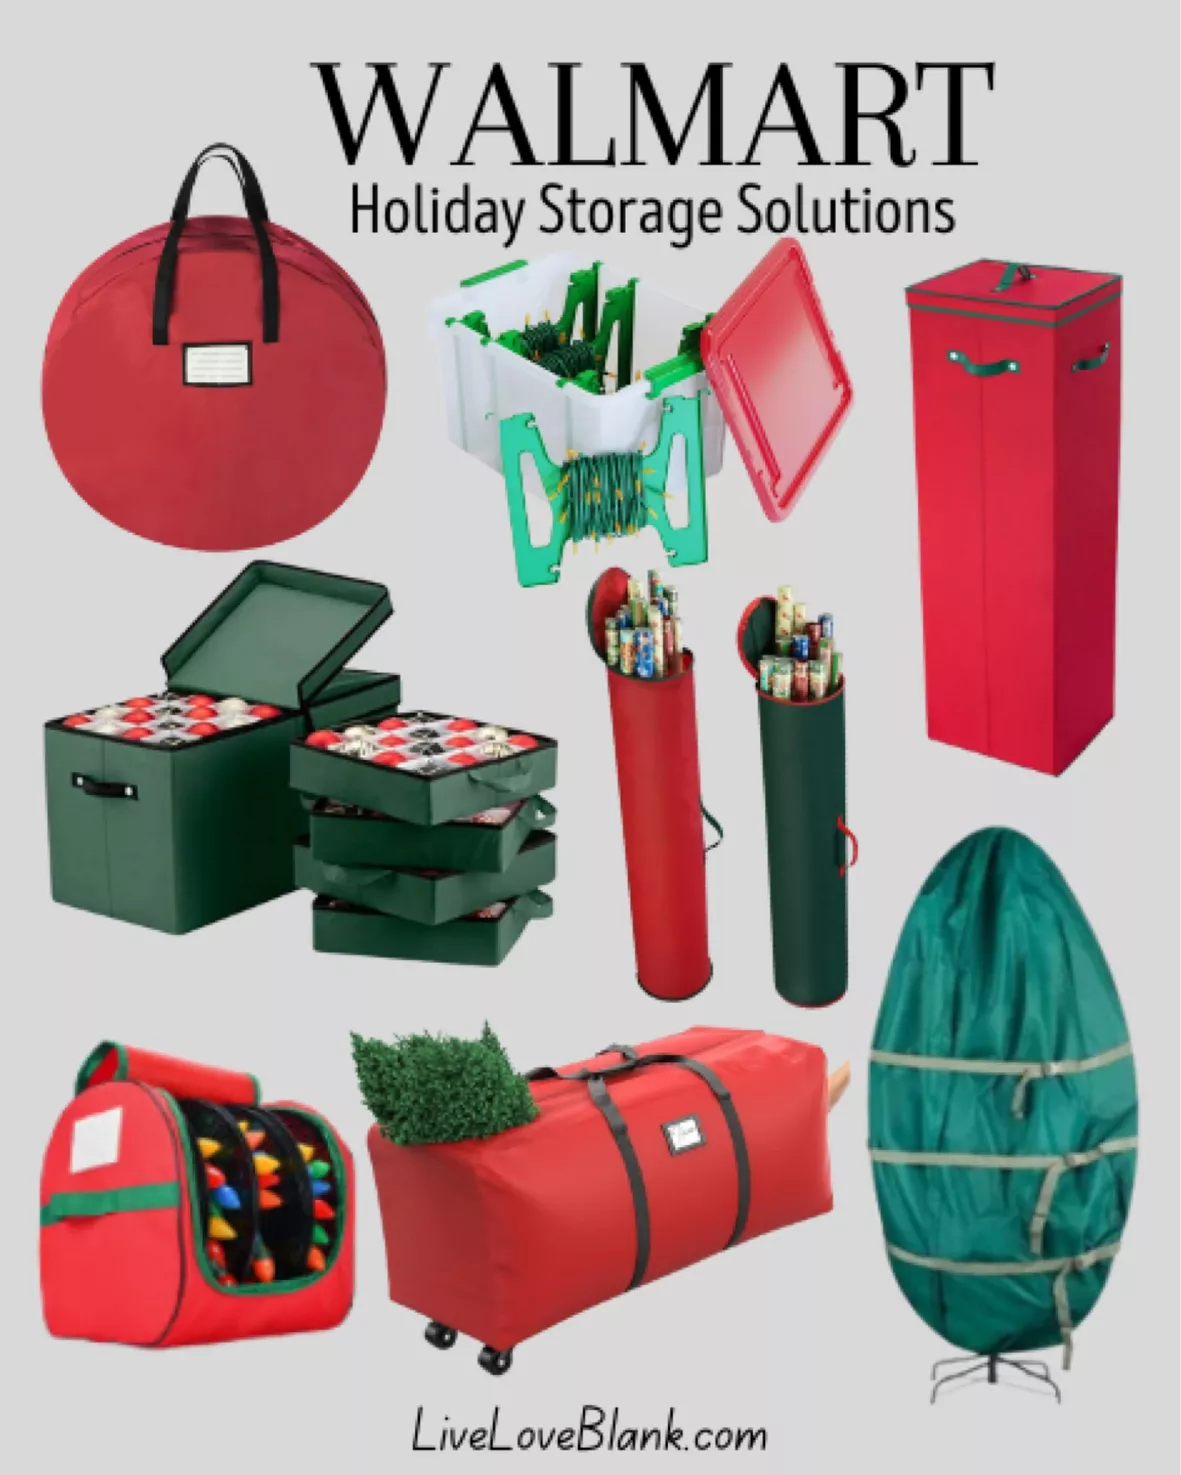 Premium Large Christmas Ornament storage Box with Lid - 3